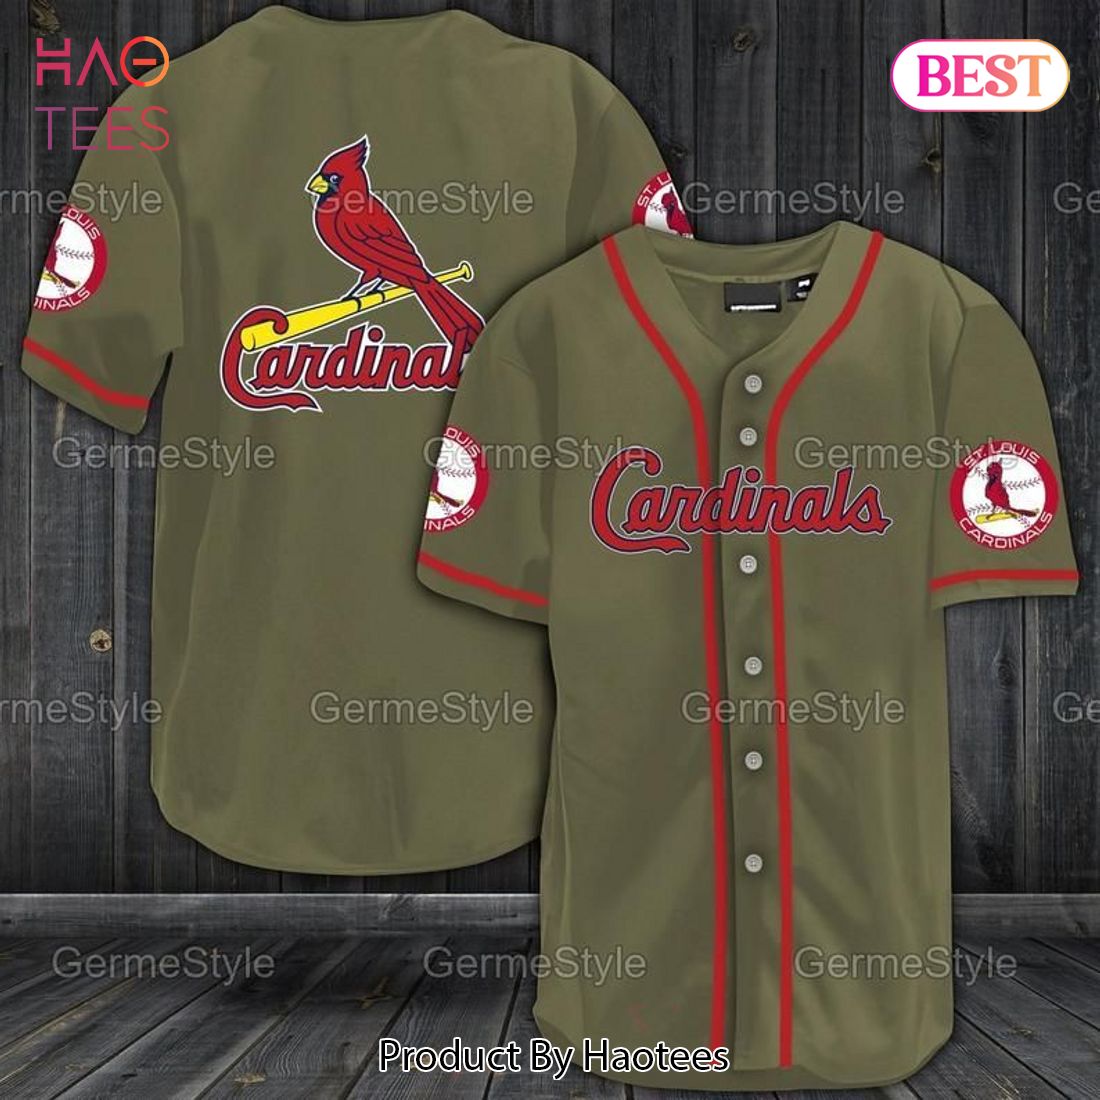 AVAILABLE St. Louis Cardinals Baseball Jersey 319